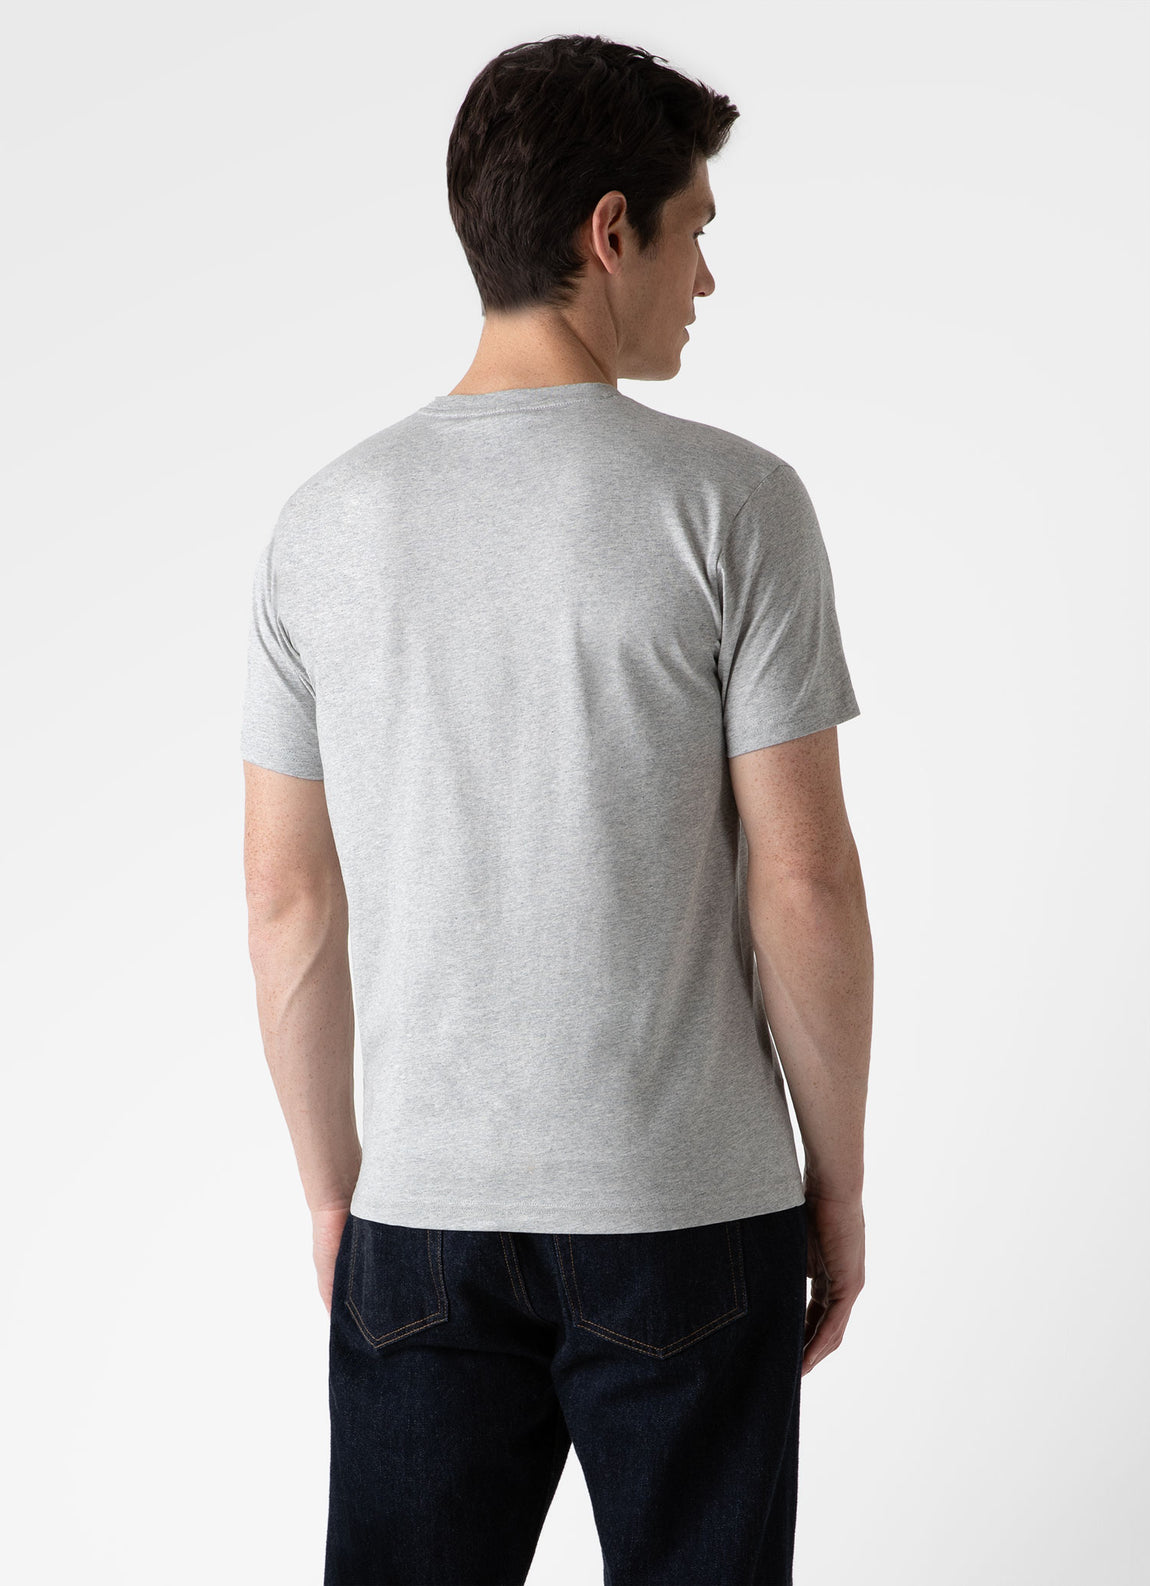 Men's Riviera Midweight T-shirt in Grey Melange | Sunspel